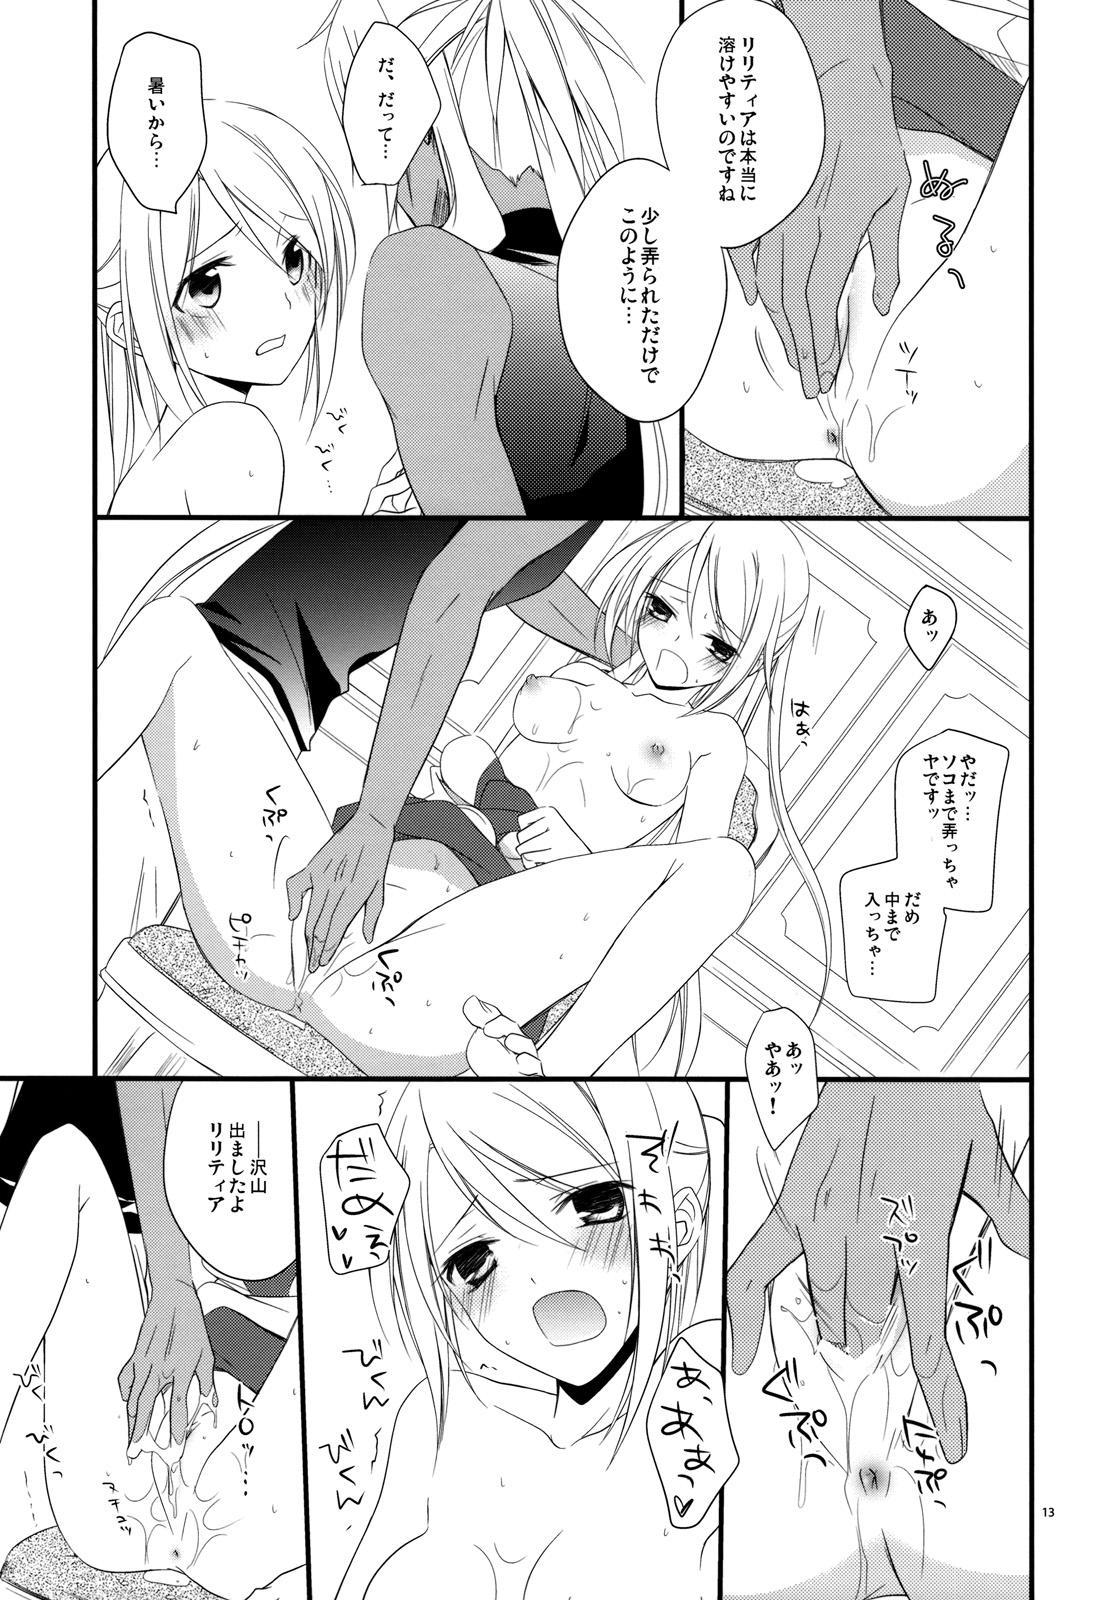 3some Tsumetai Okashi - Wild arms 5 Highheels - Page 12